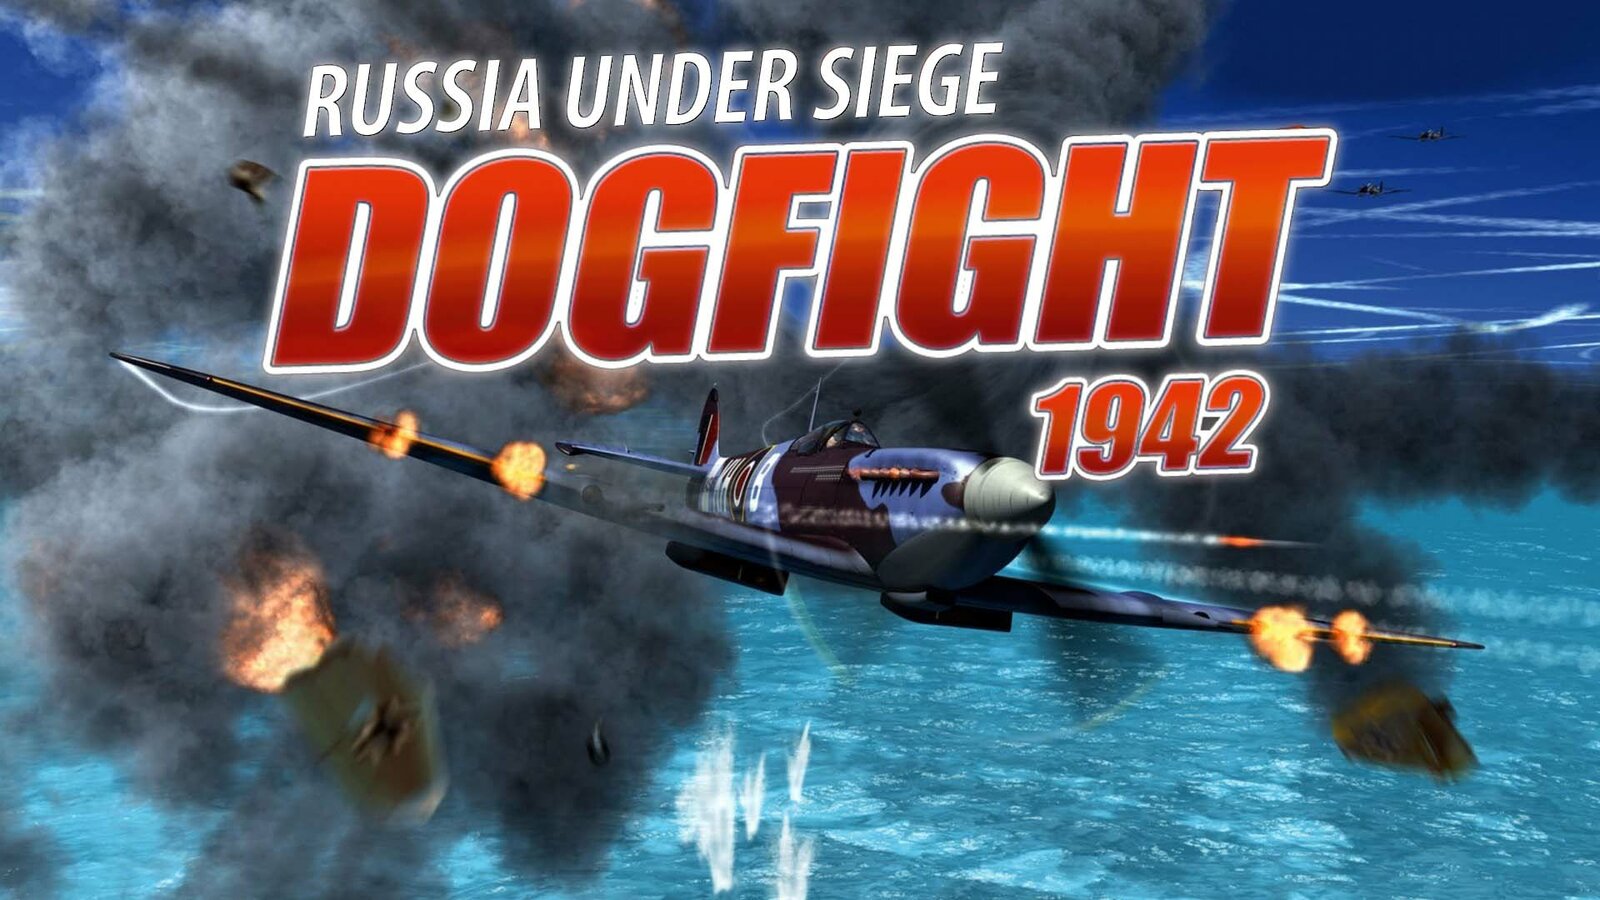 Dogfight 1942 - Russia Under Siege